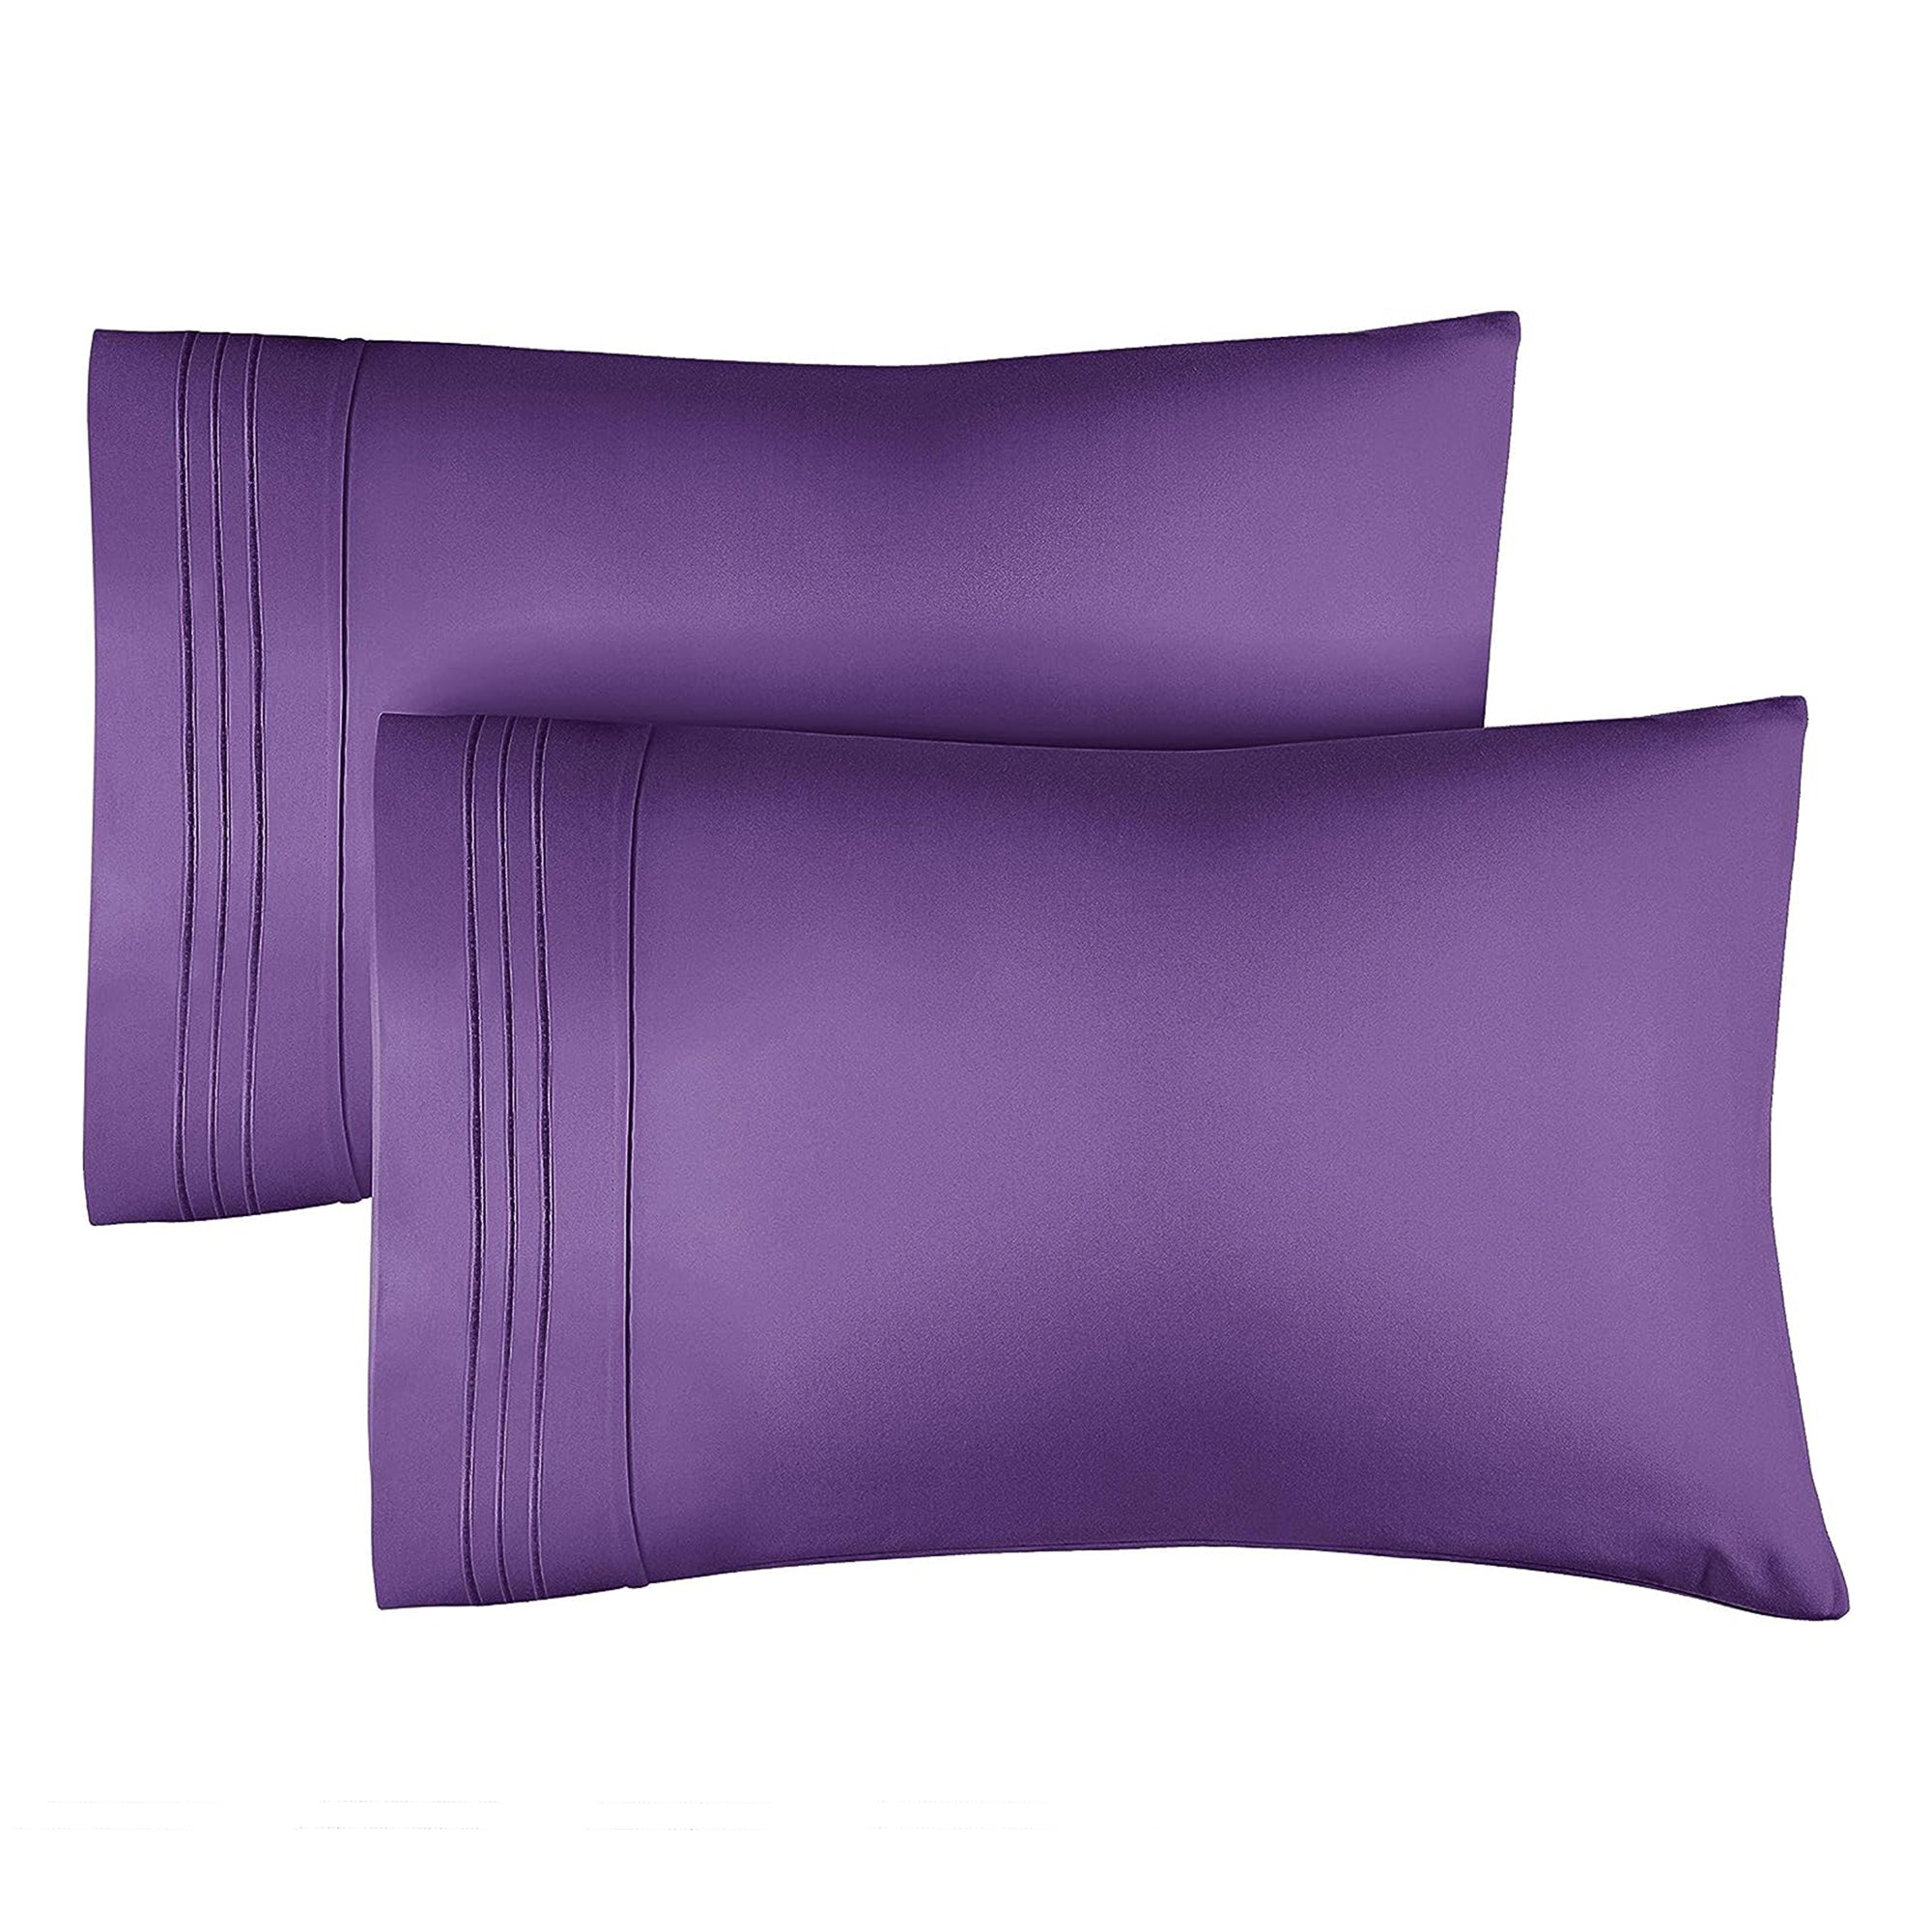 2 Pillowcase Set - Purple